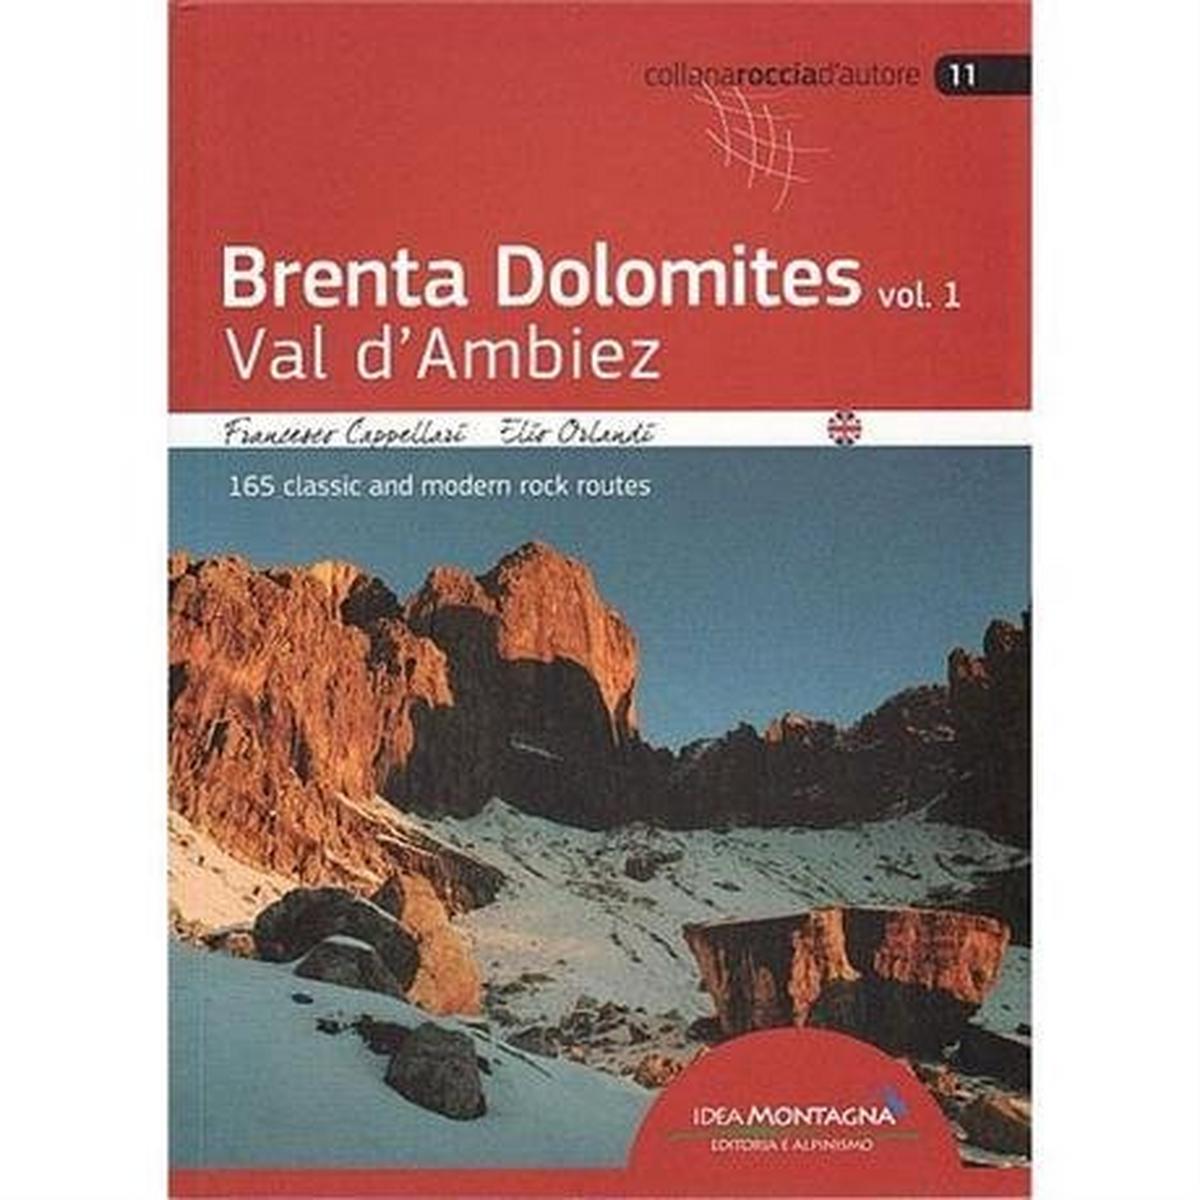 Miscellaneous Climbing Guide Book: Brenta Dolomites Vol 1 - Val d'Ambiez